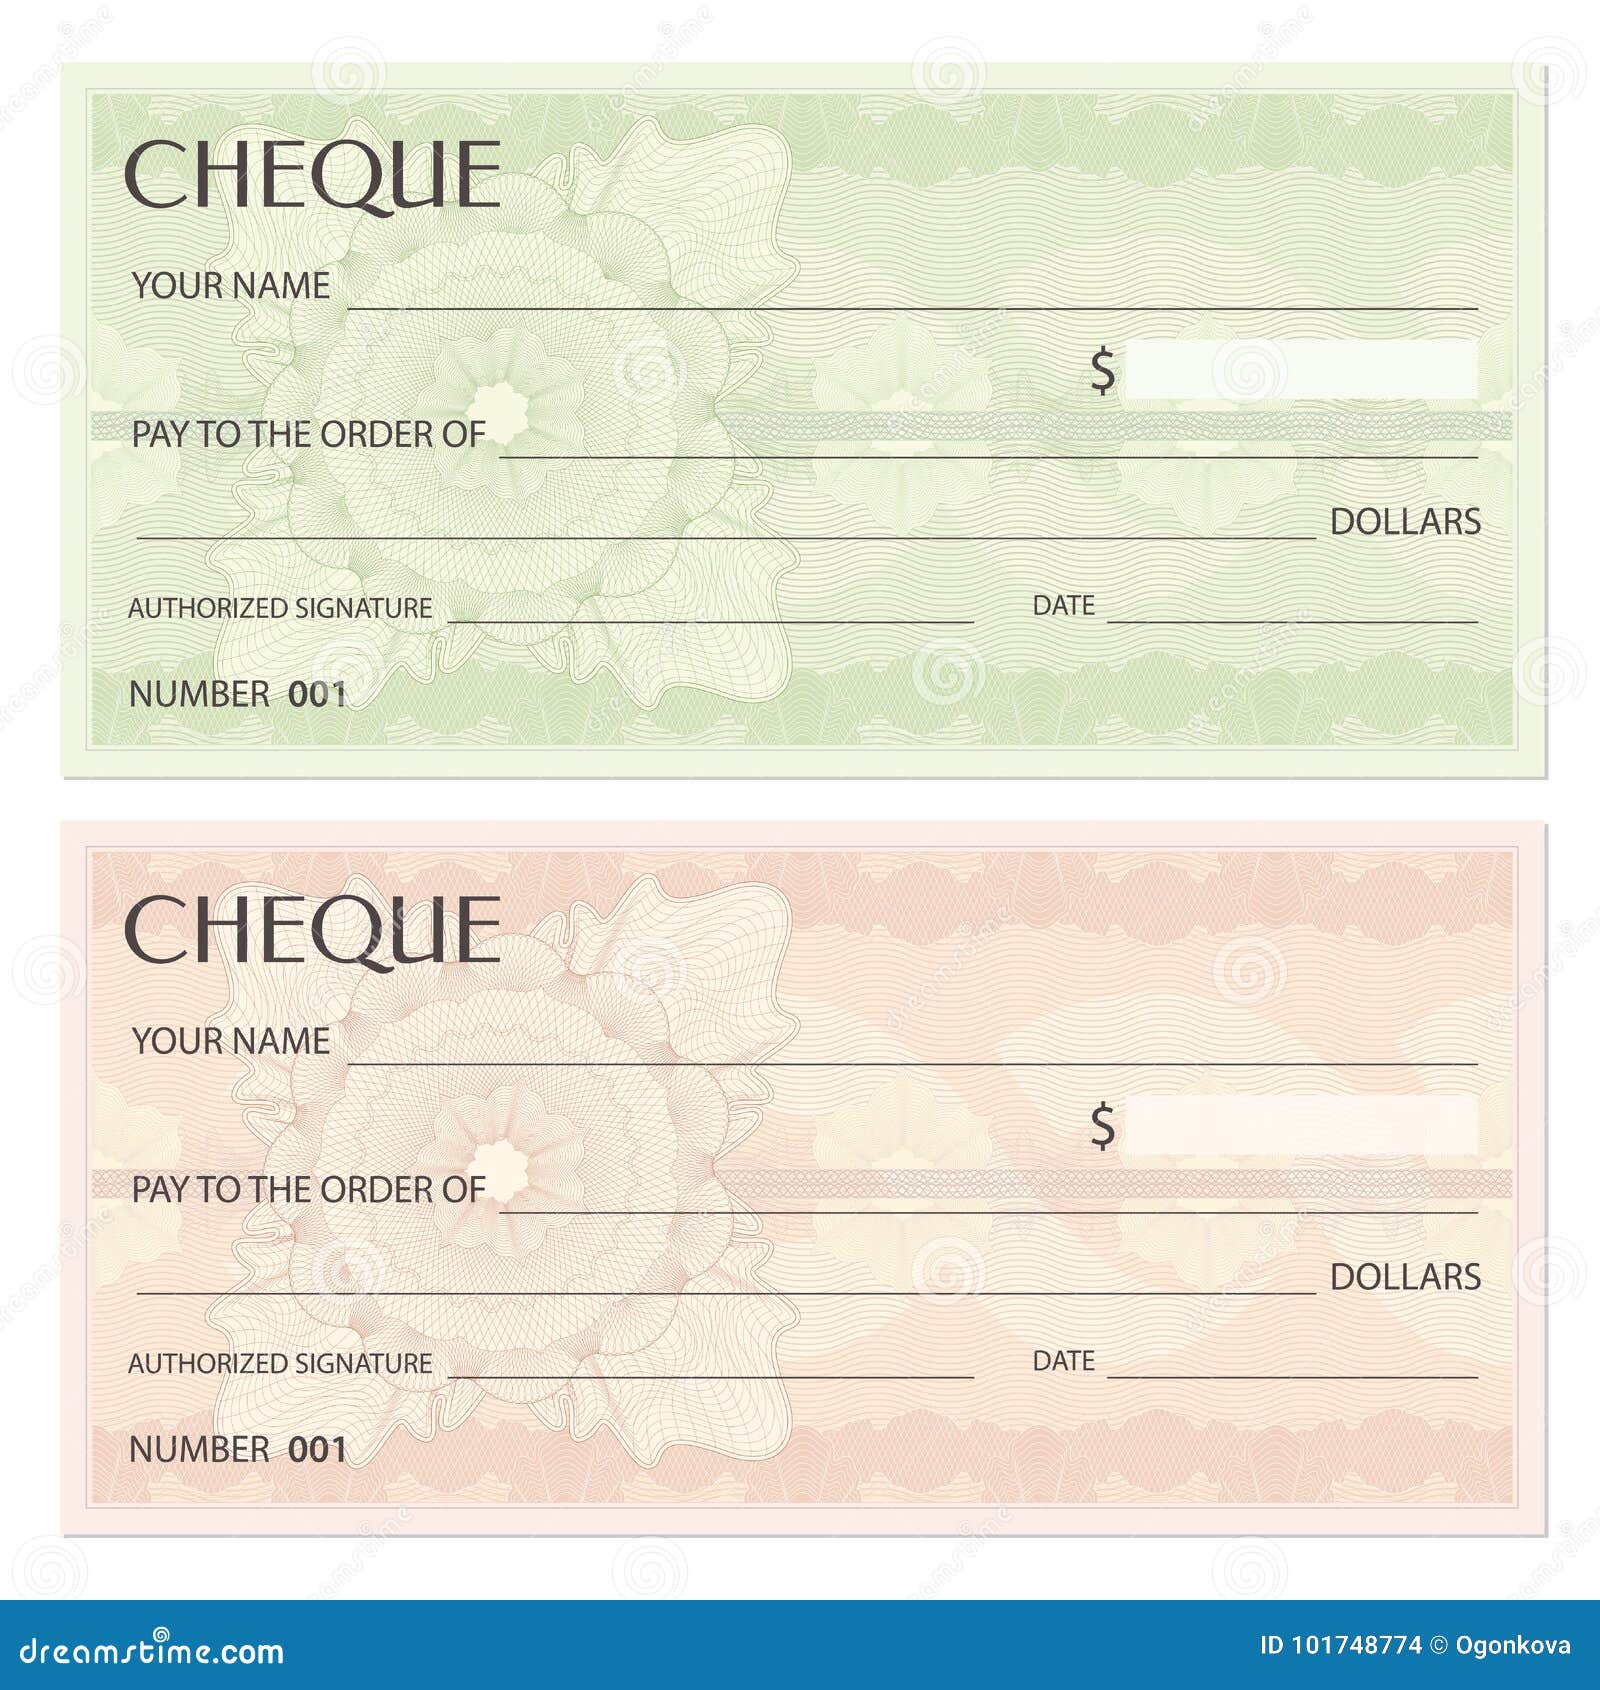 check cheque, chequebook template. guilloche pattern with watermark, spirograph